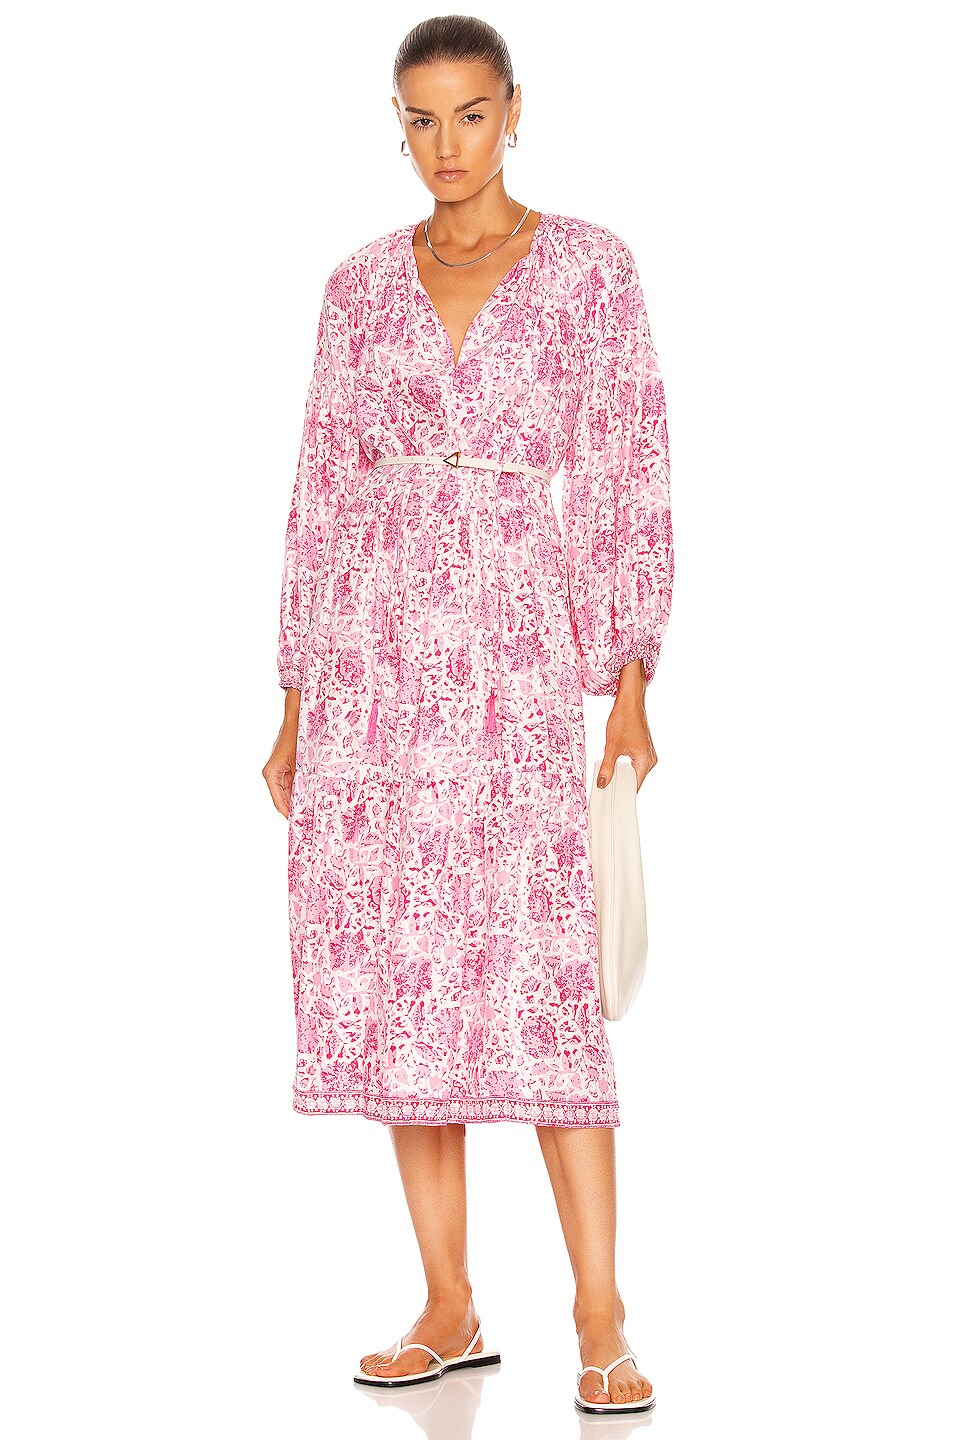 Image 1 of Natalie Martin Briana Dress in Geranium Print Pink